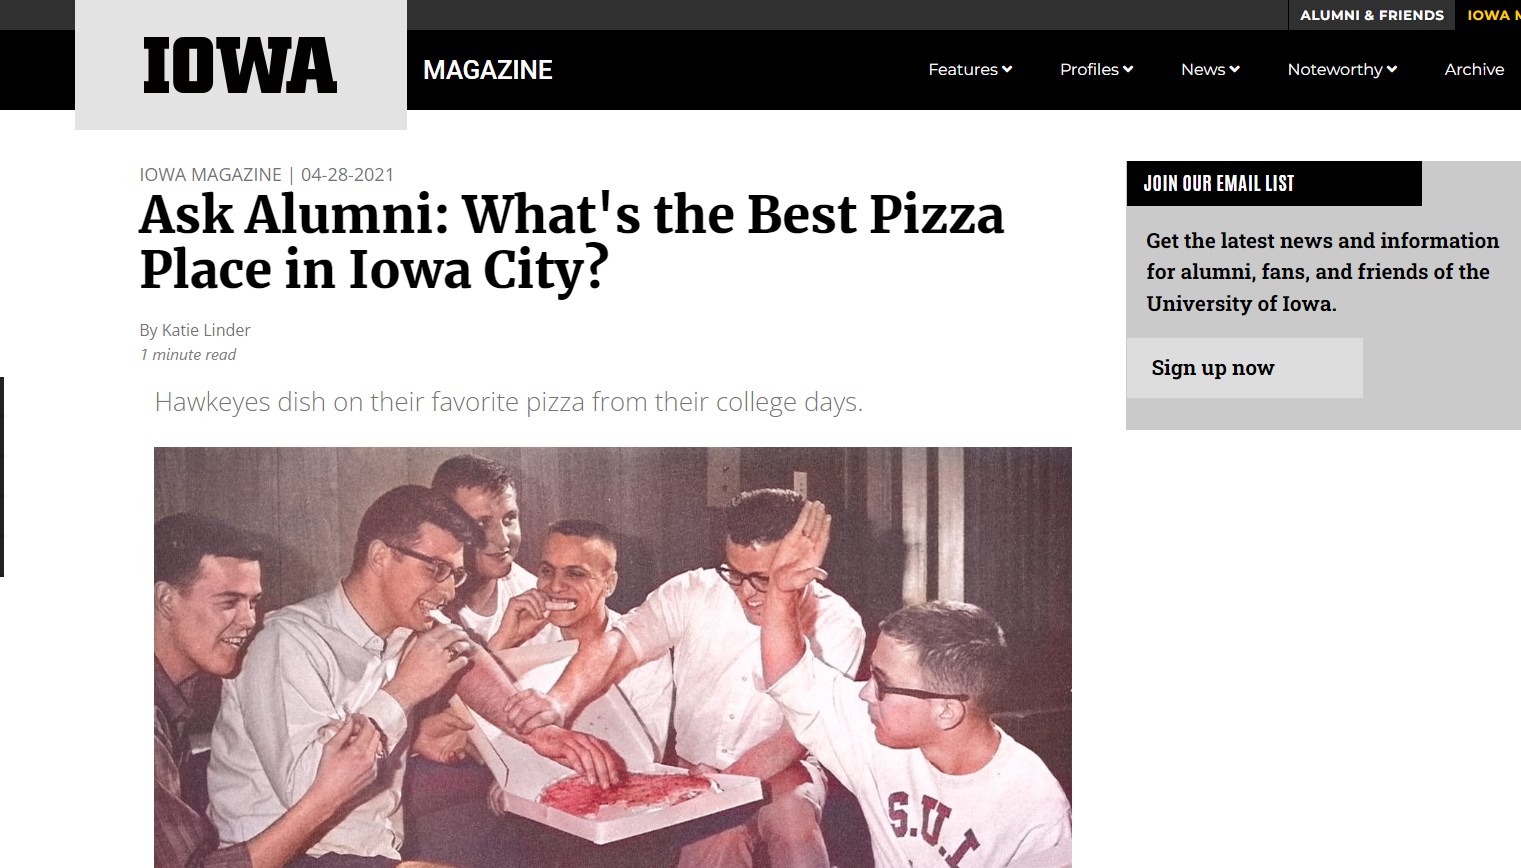 Webpage screenshot of IOWA magazine article on University of Iowa alumni pizza recommendations.